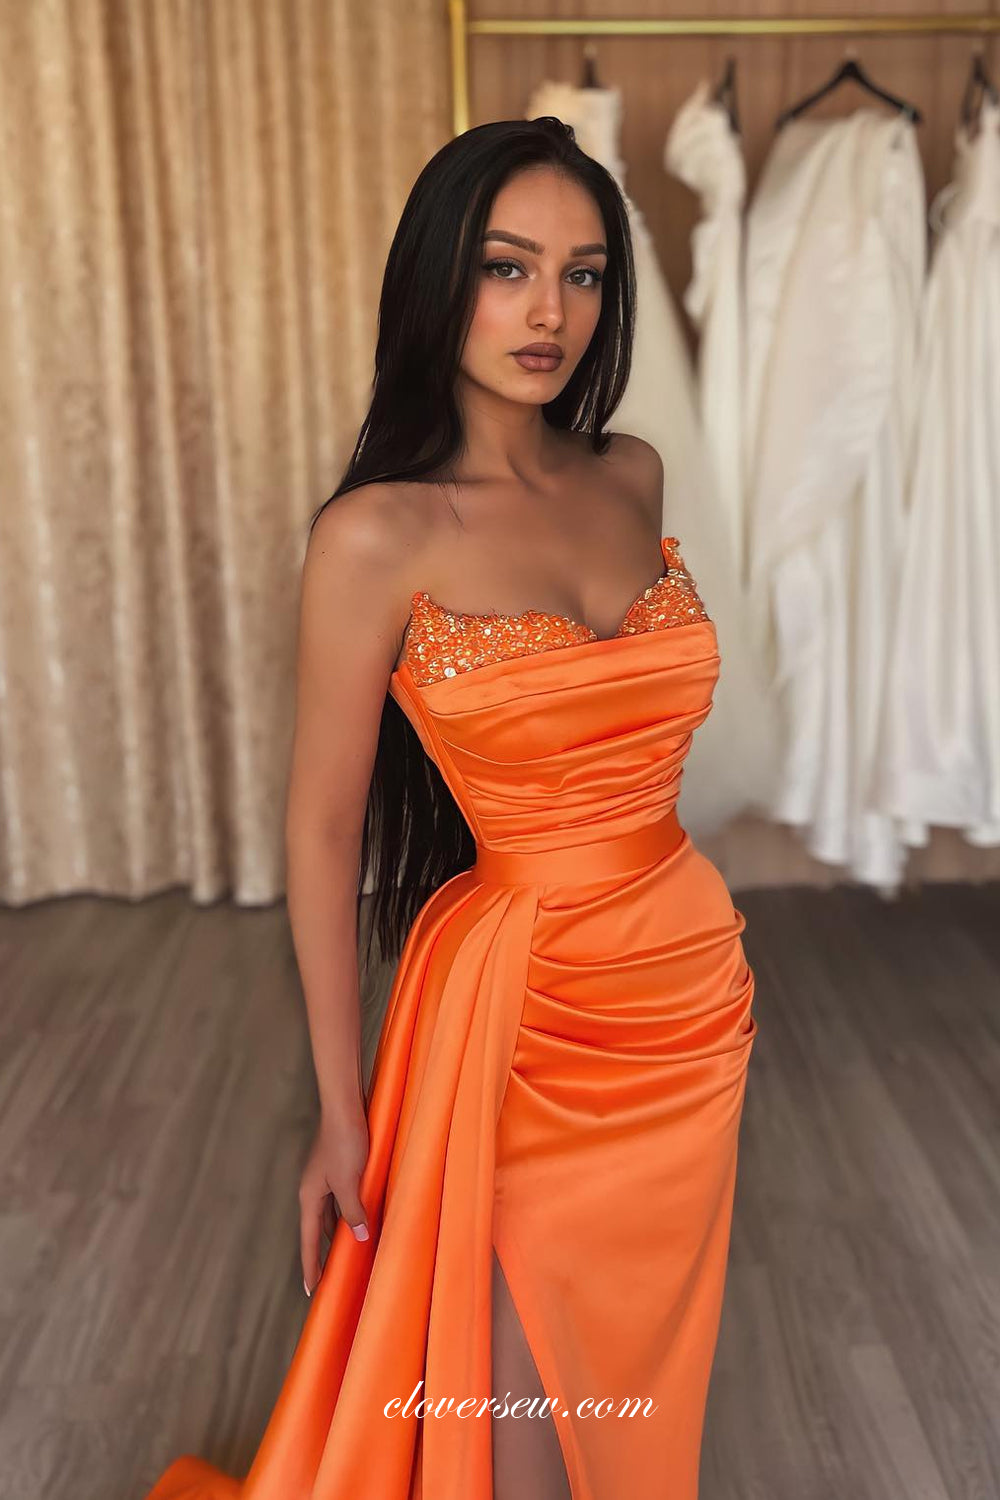 Beaded Neckline Strapless Orange Satin Sheath With Side Slit Prom Dresses, CP0927